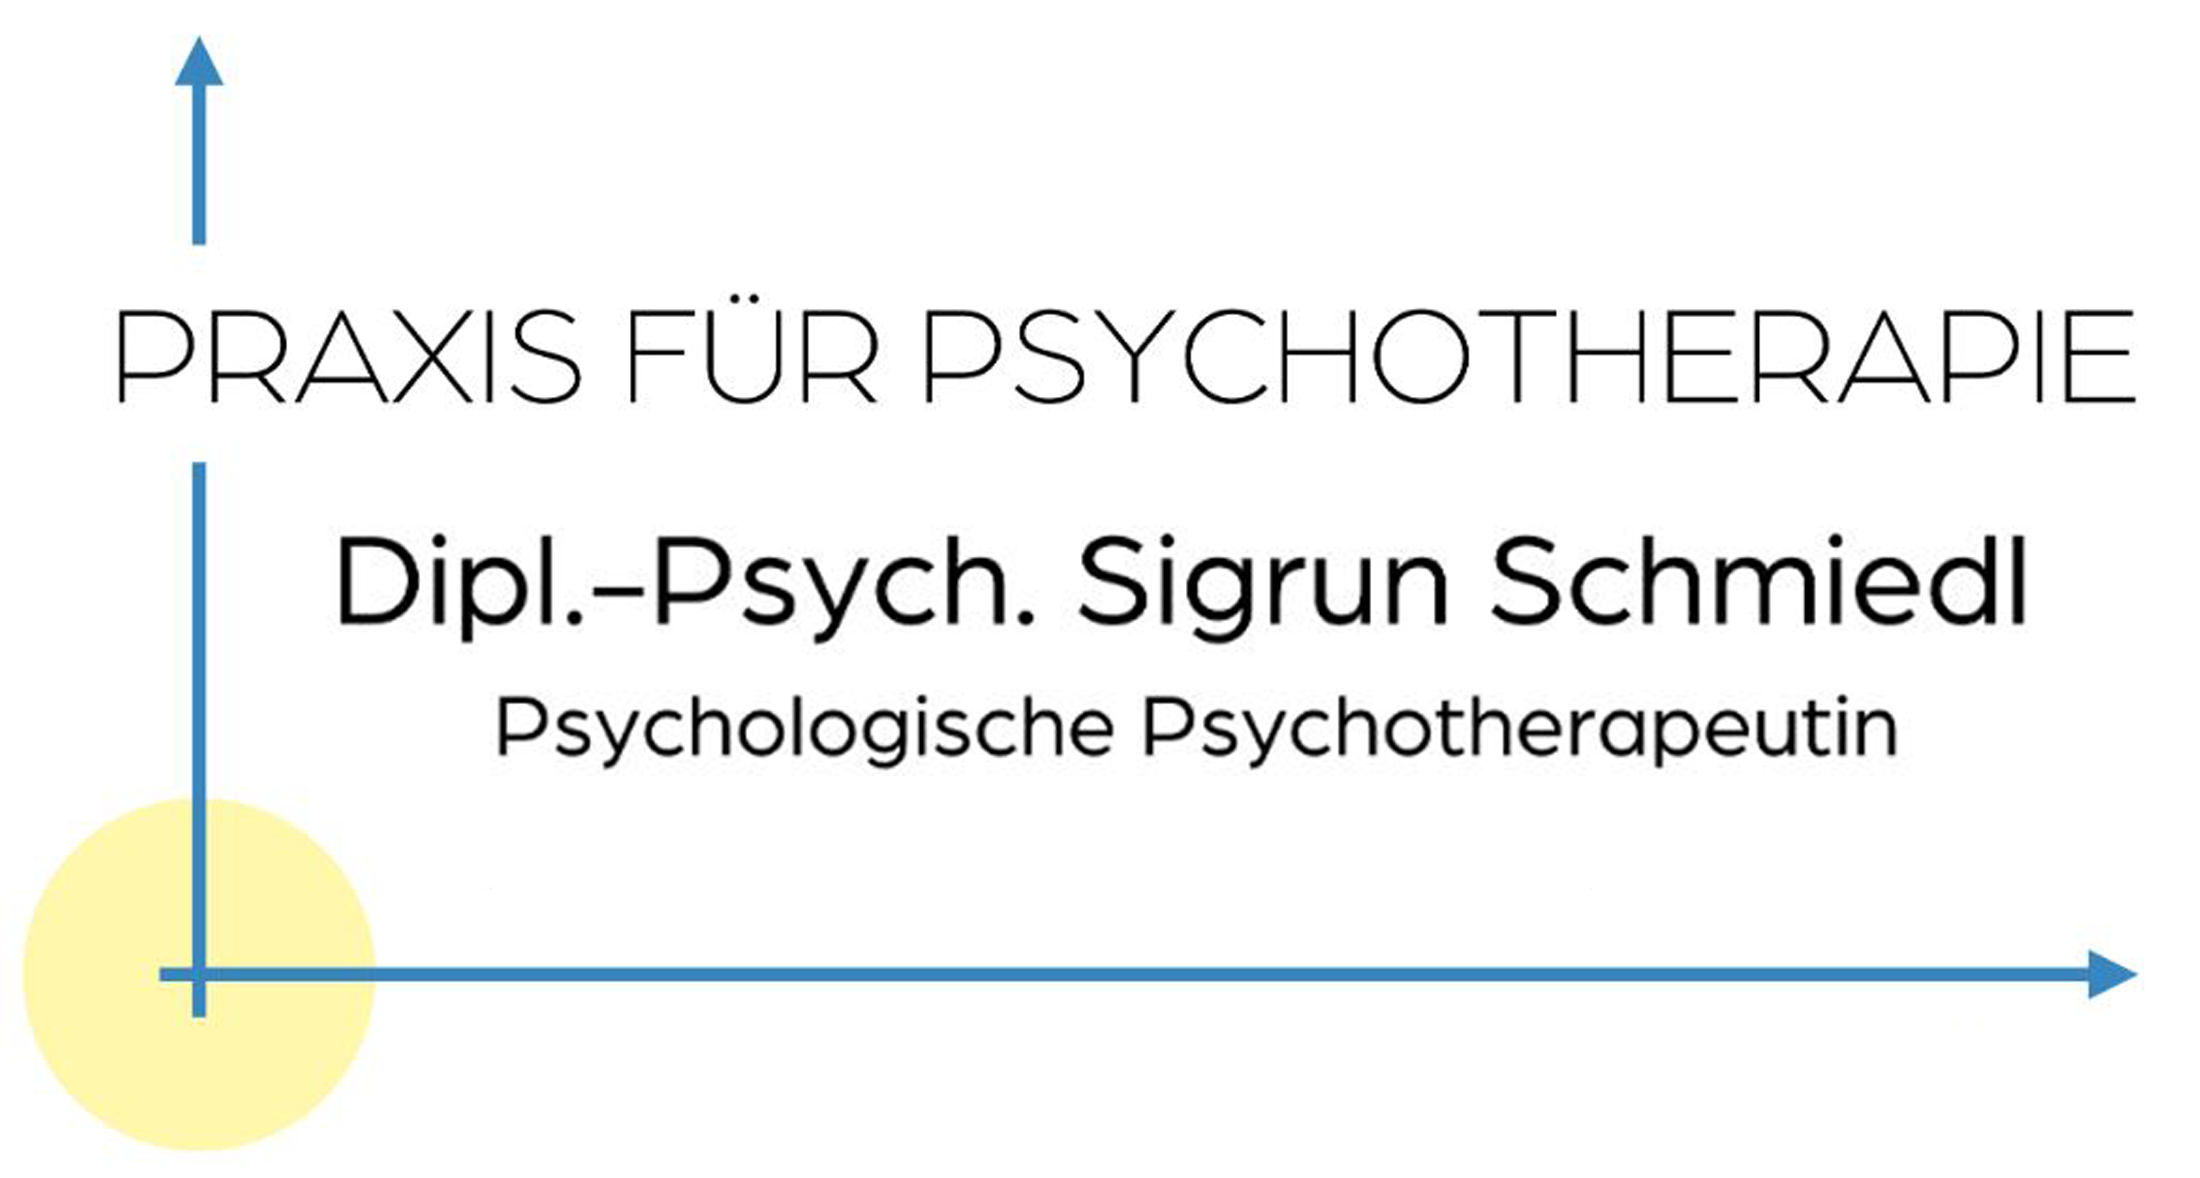 Psychotherapie Sigrun Schmiedl